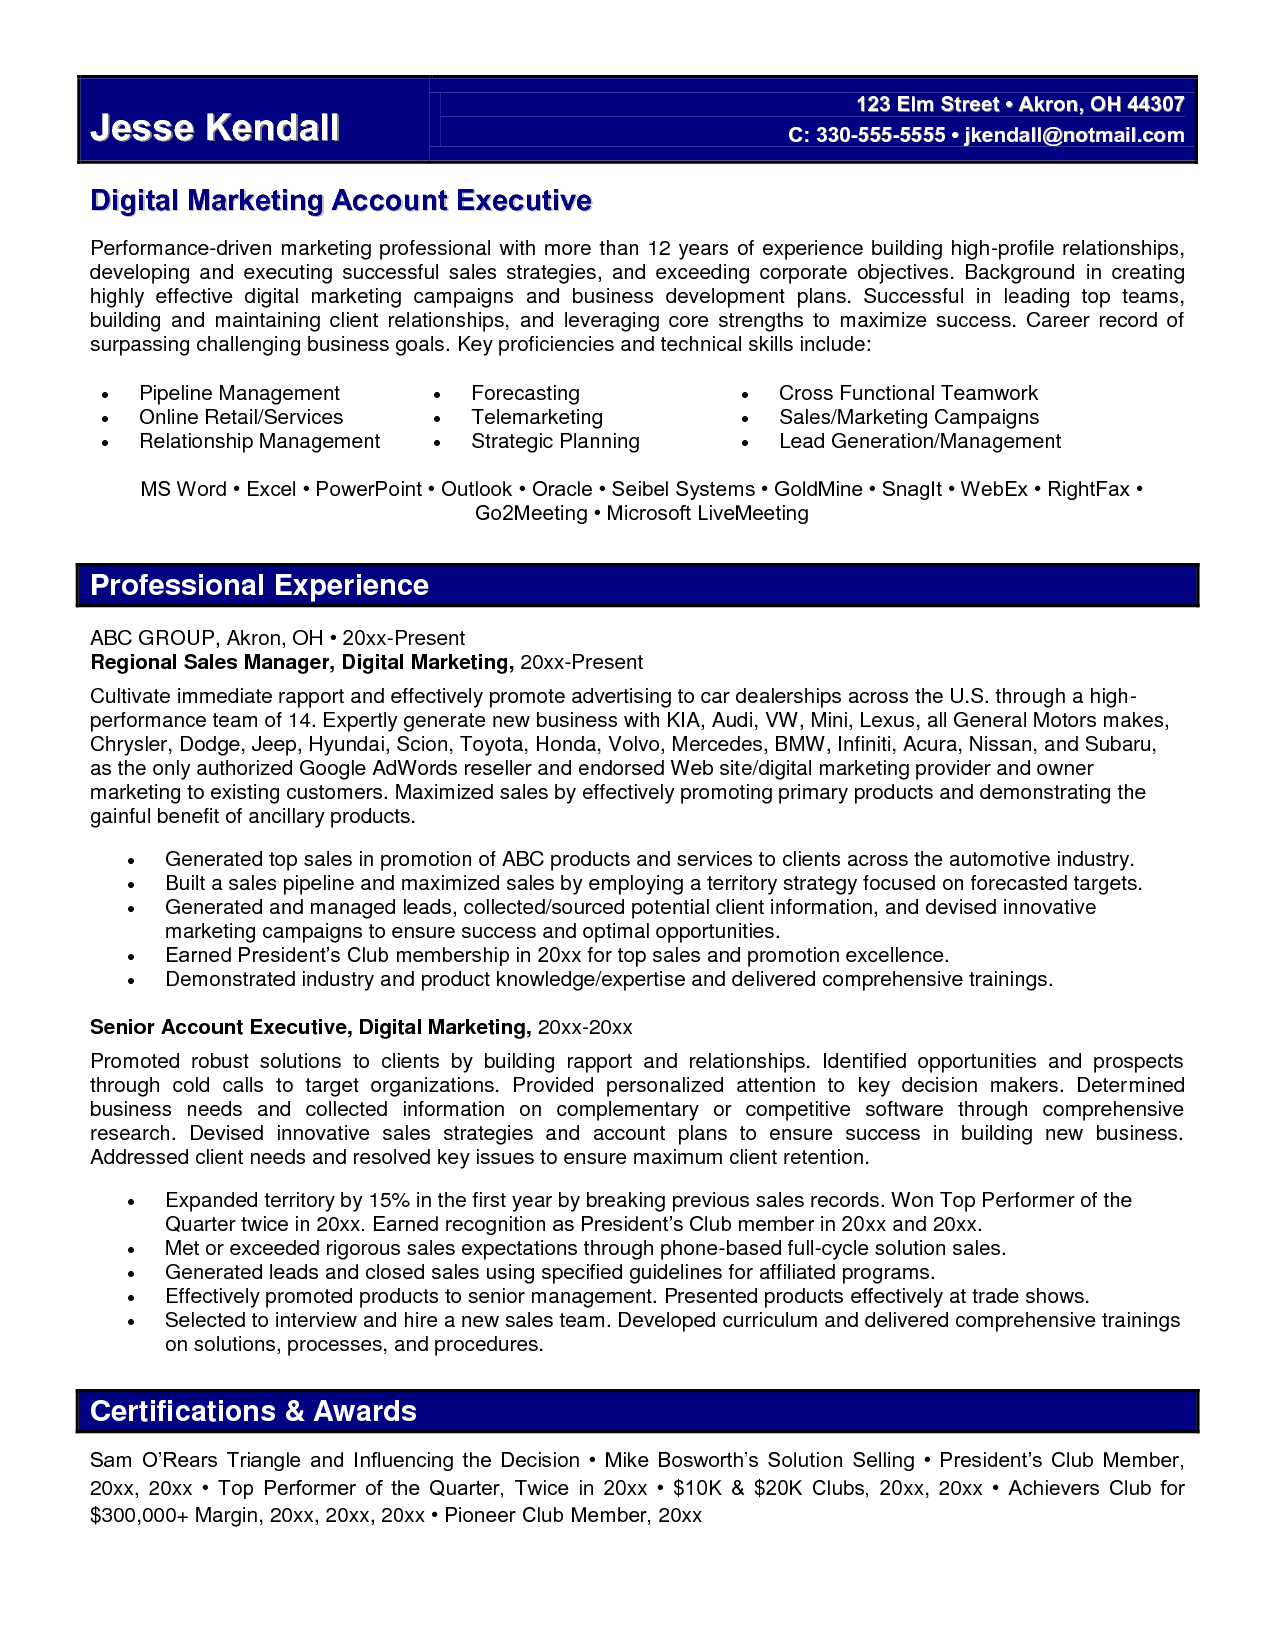 digital marketing resume example essaymafia com